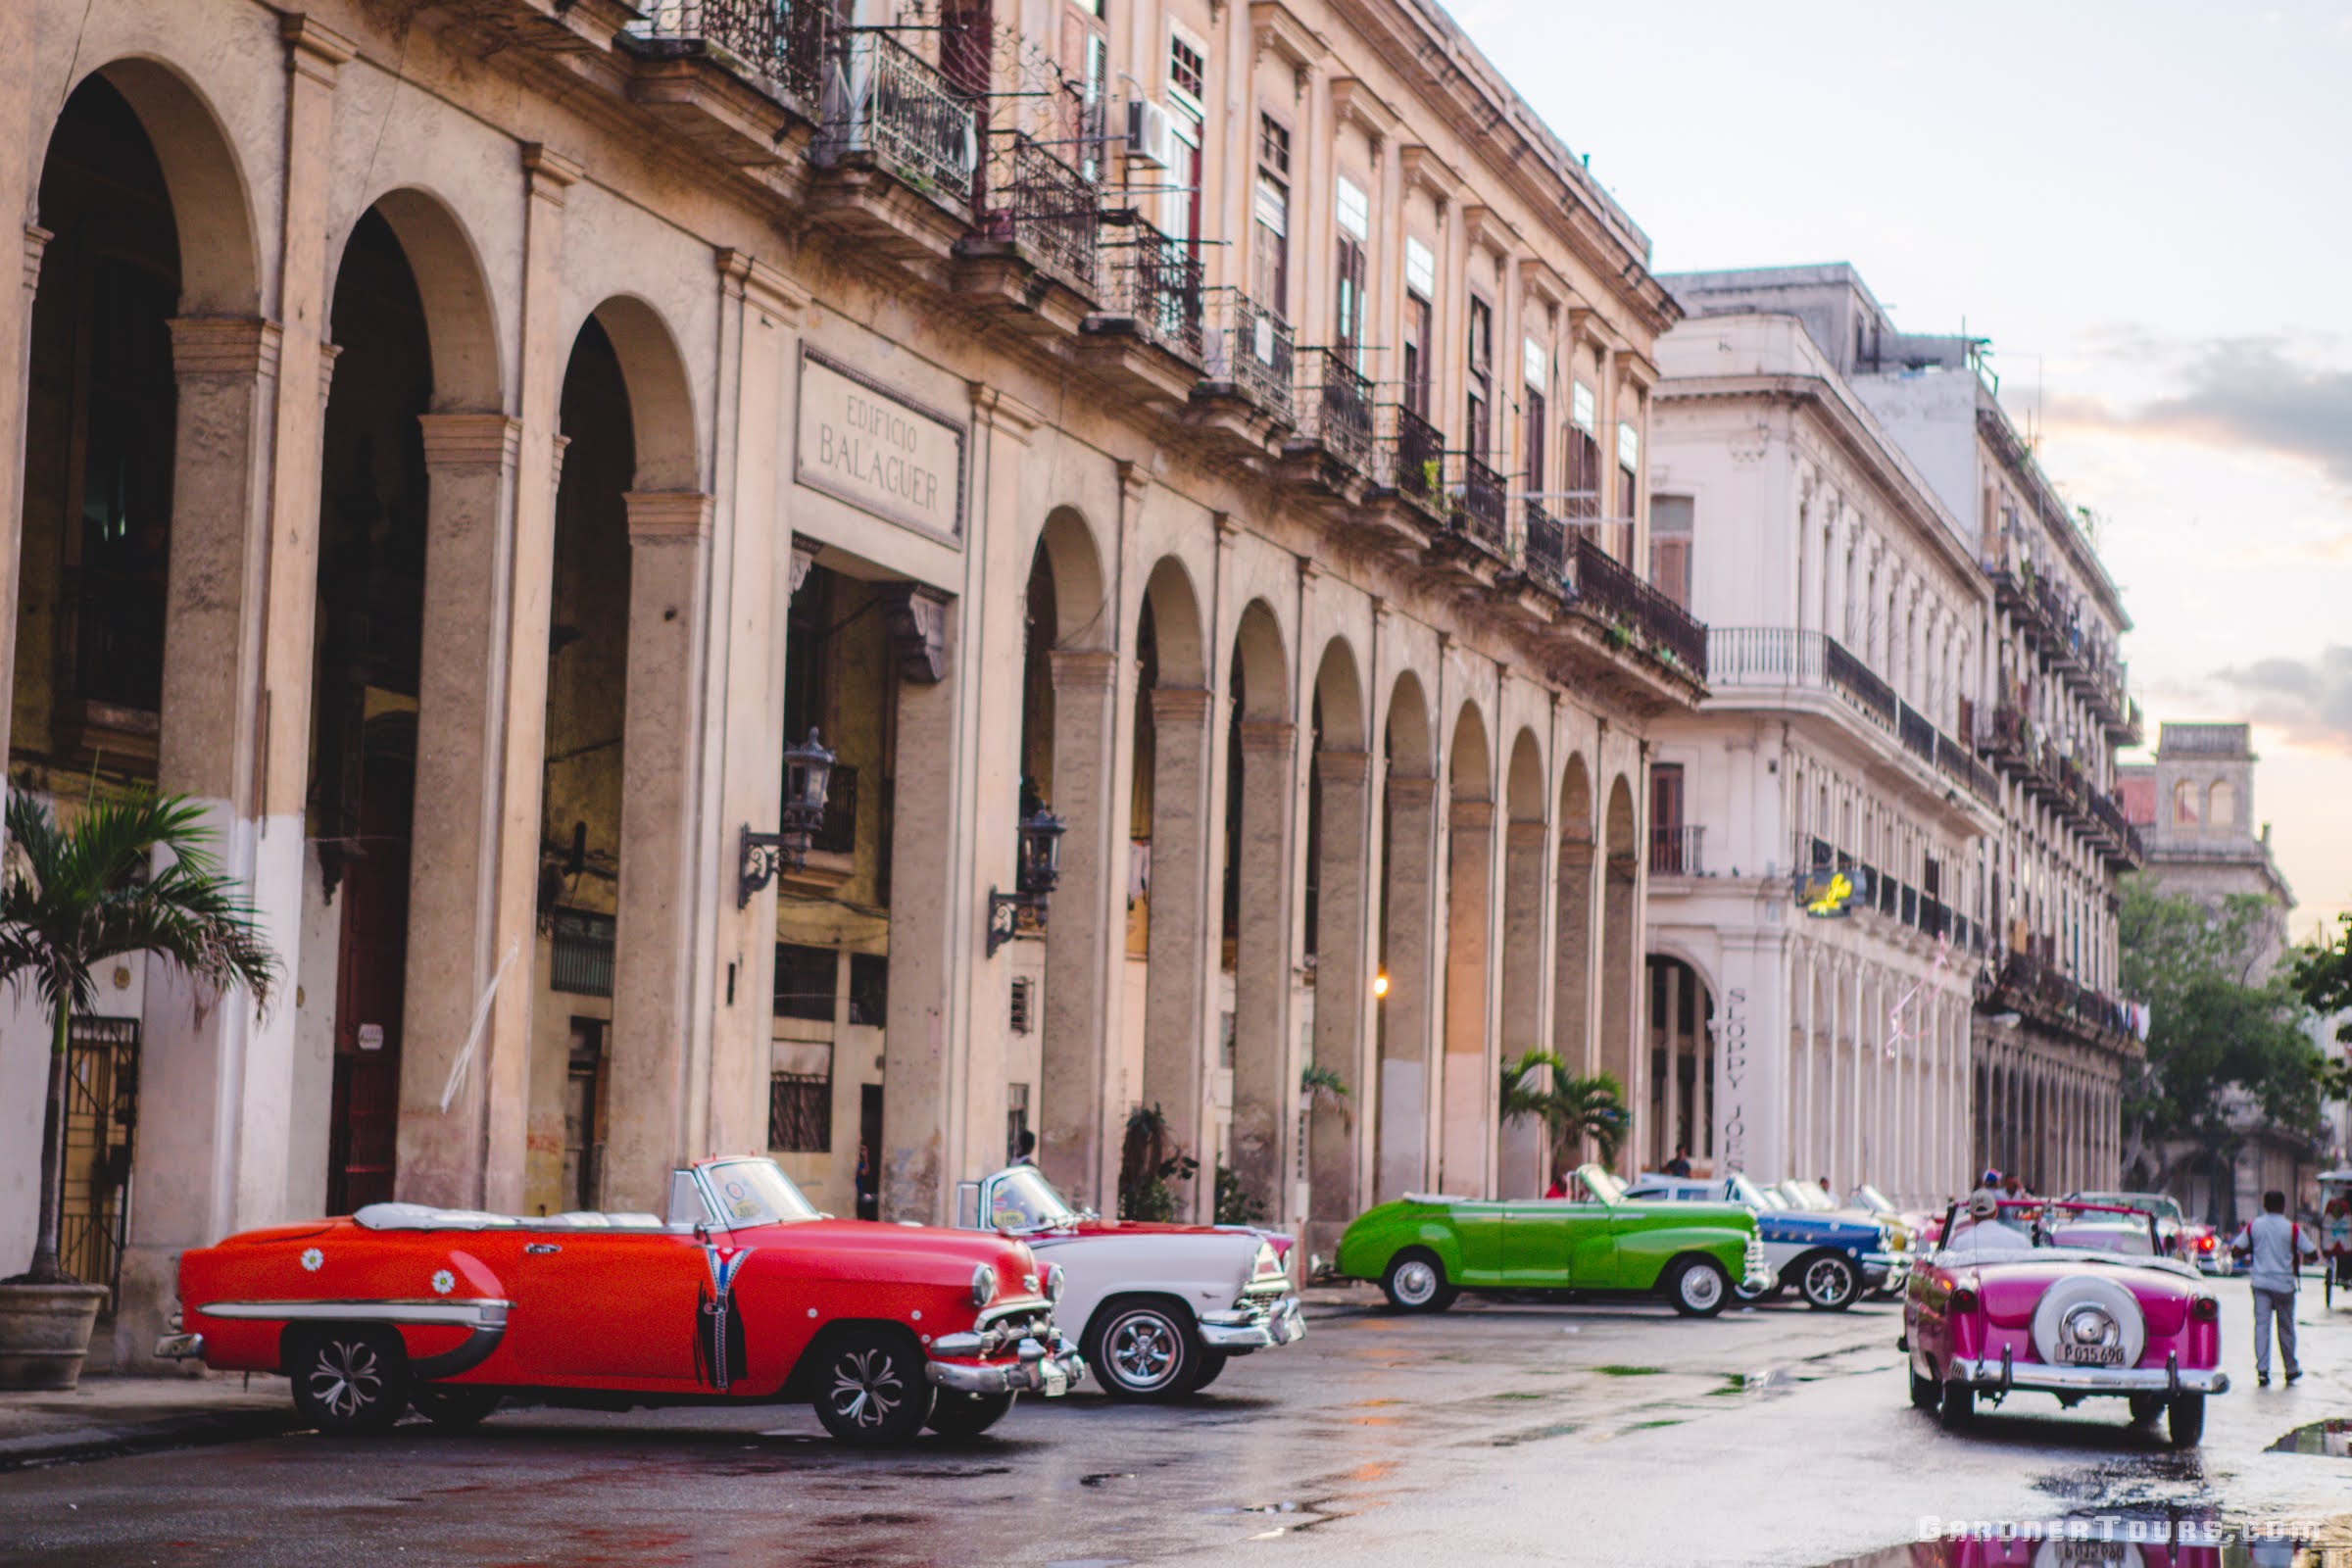 Classic Cars lining the streets of Old Havana near Sloppy Joe's Bar in Havana, Cuba